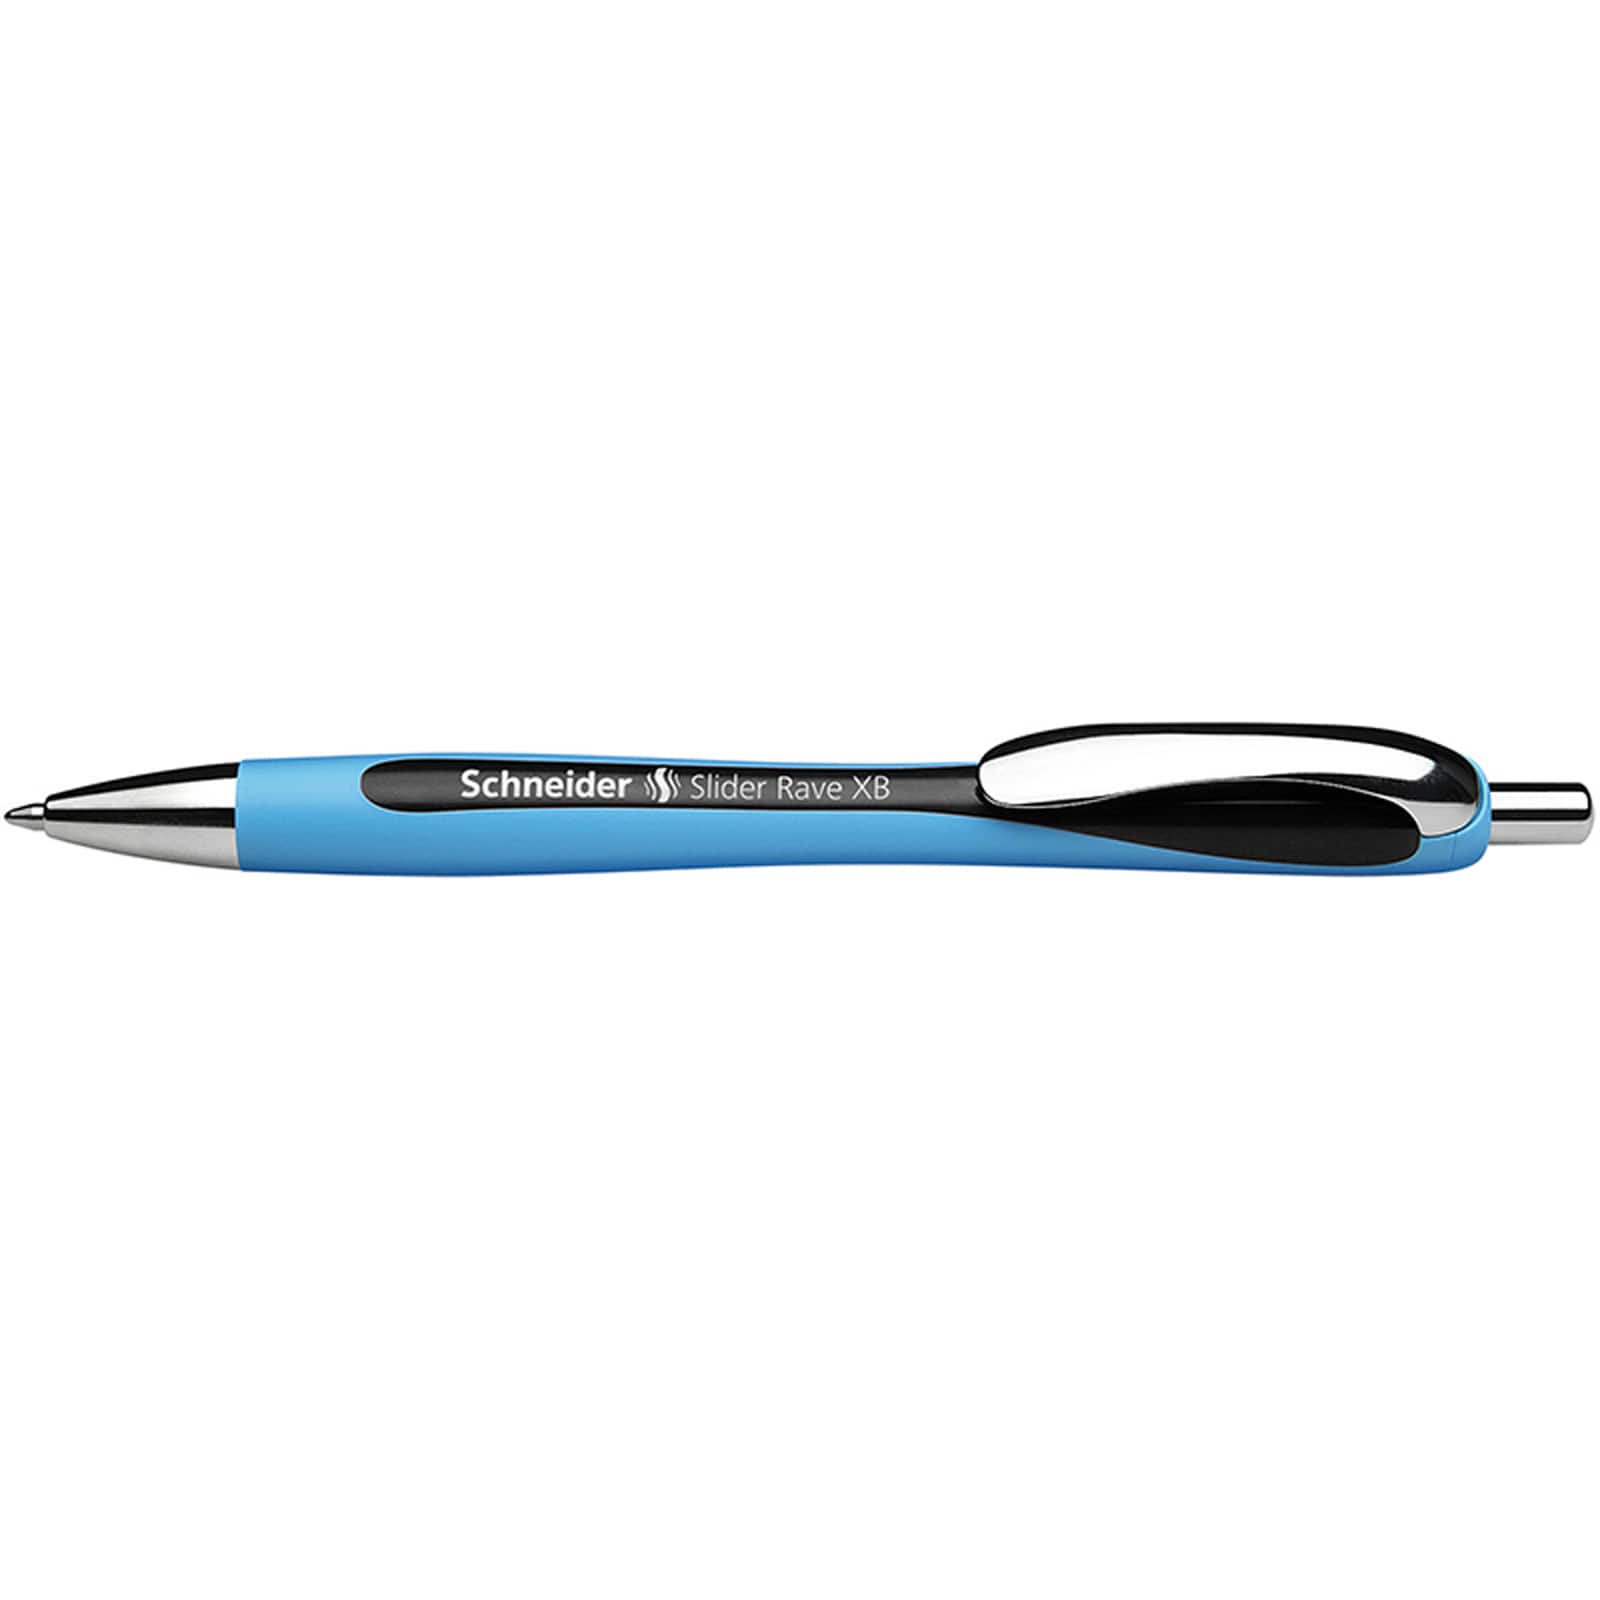 Find the Schneider® Black Slider Rave Retractable Ballpoint Pens, 5ct., at